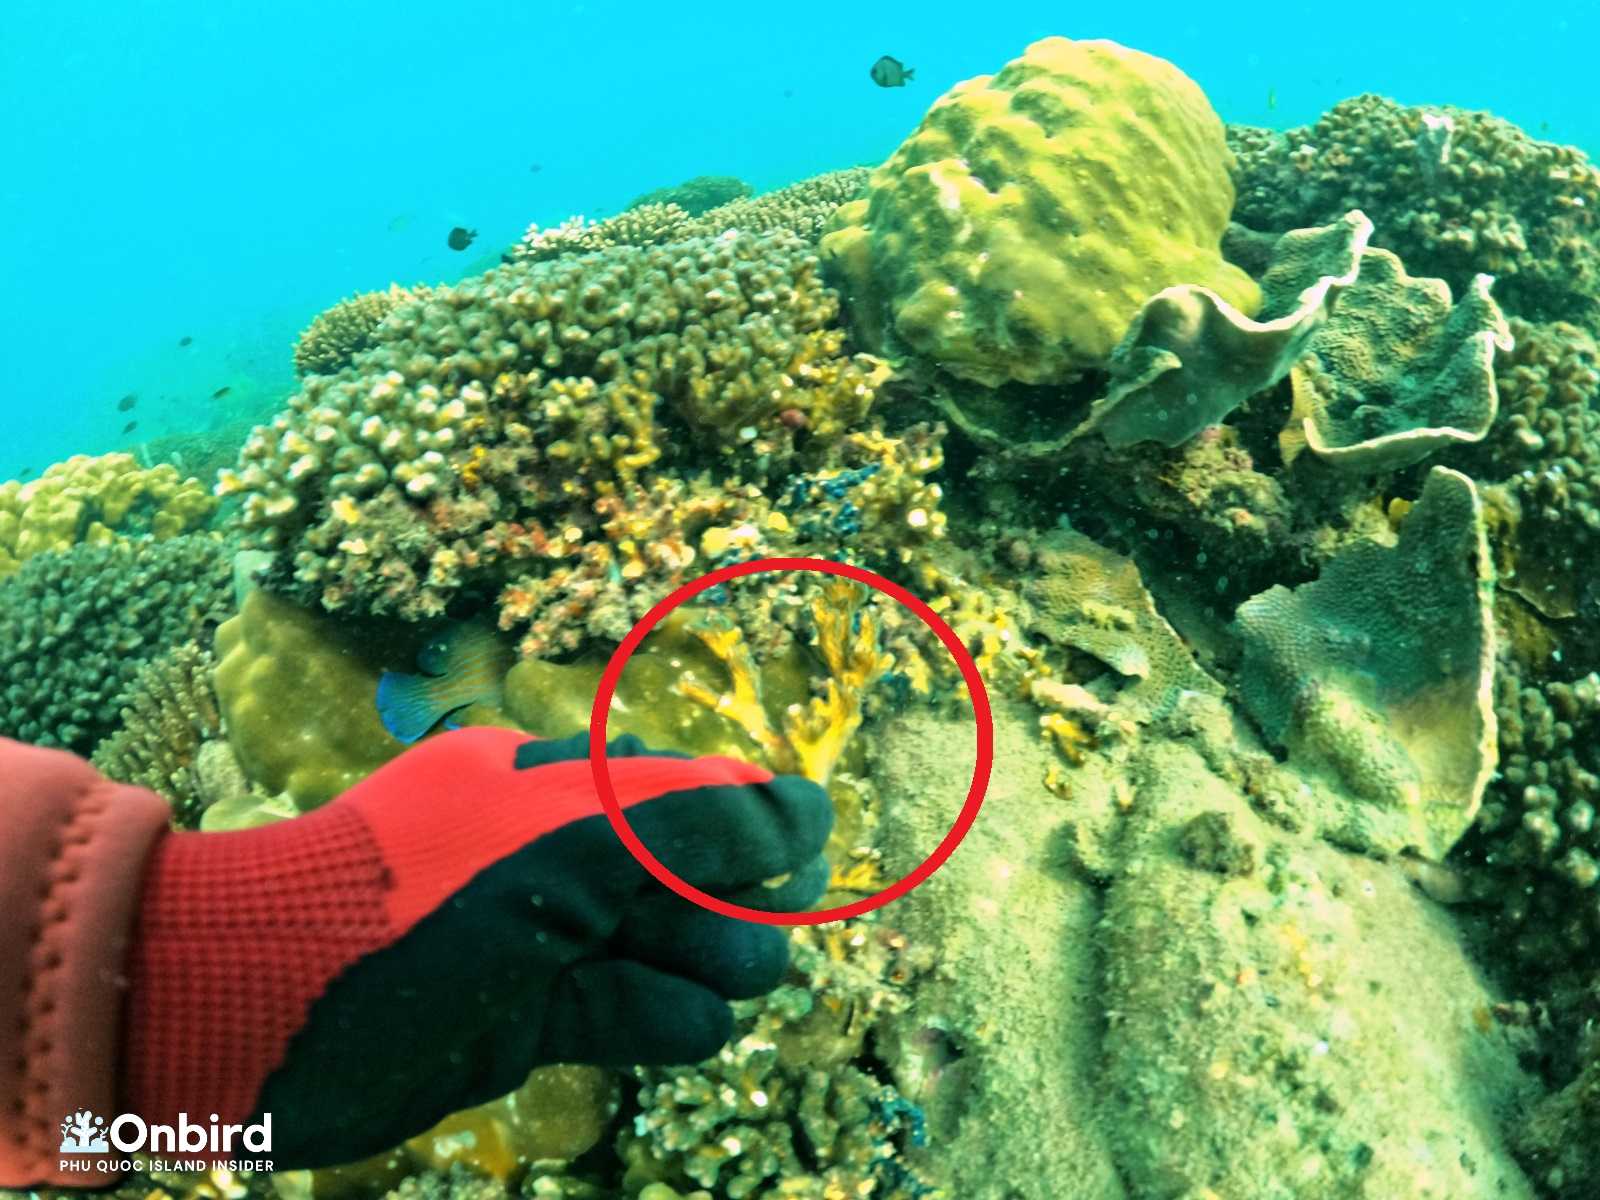 Removing the broken alive corals - Coral Restoration in Phu Quoc Island, Vietnam